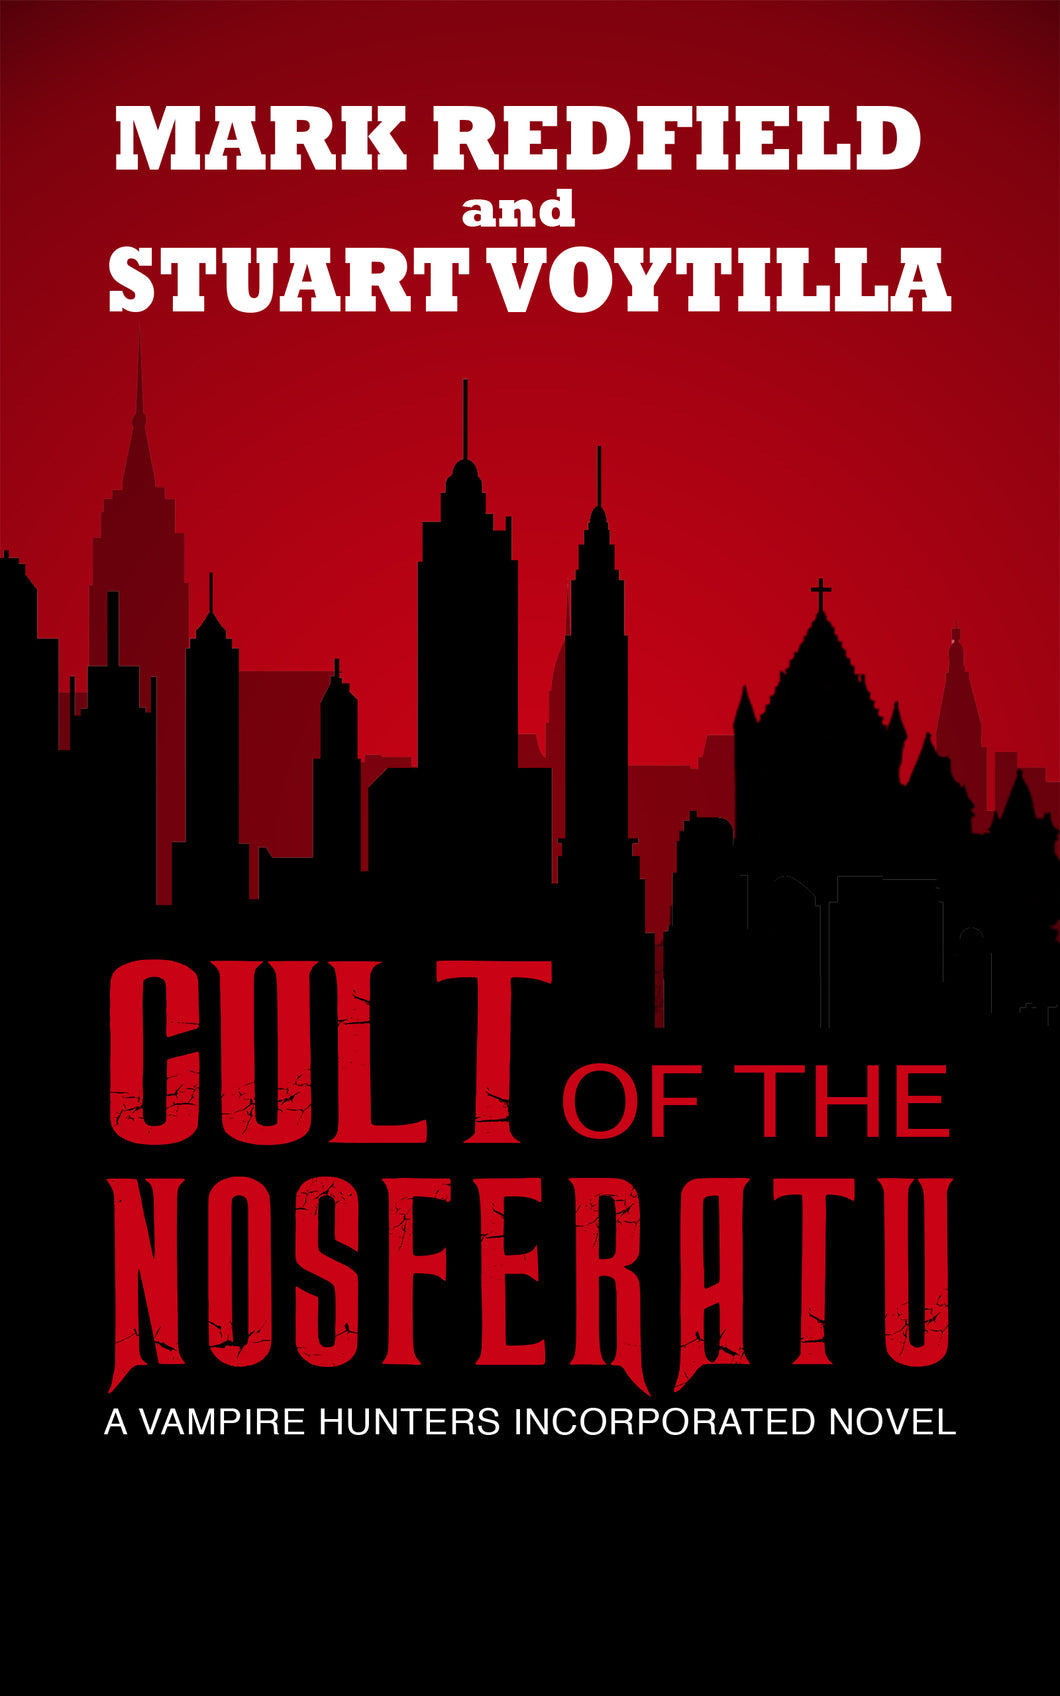 CULT OF THE NOSFERATU, BOOK 1 VAMPIRE HUNTERS INCORPORATED by Mark Redfield and Stuart Voytilla